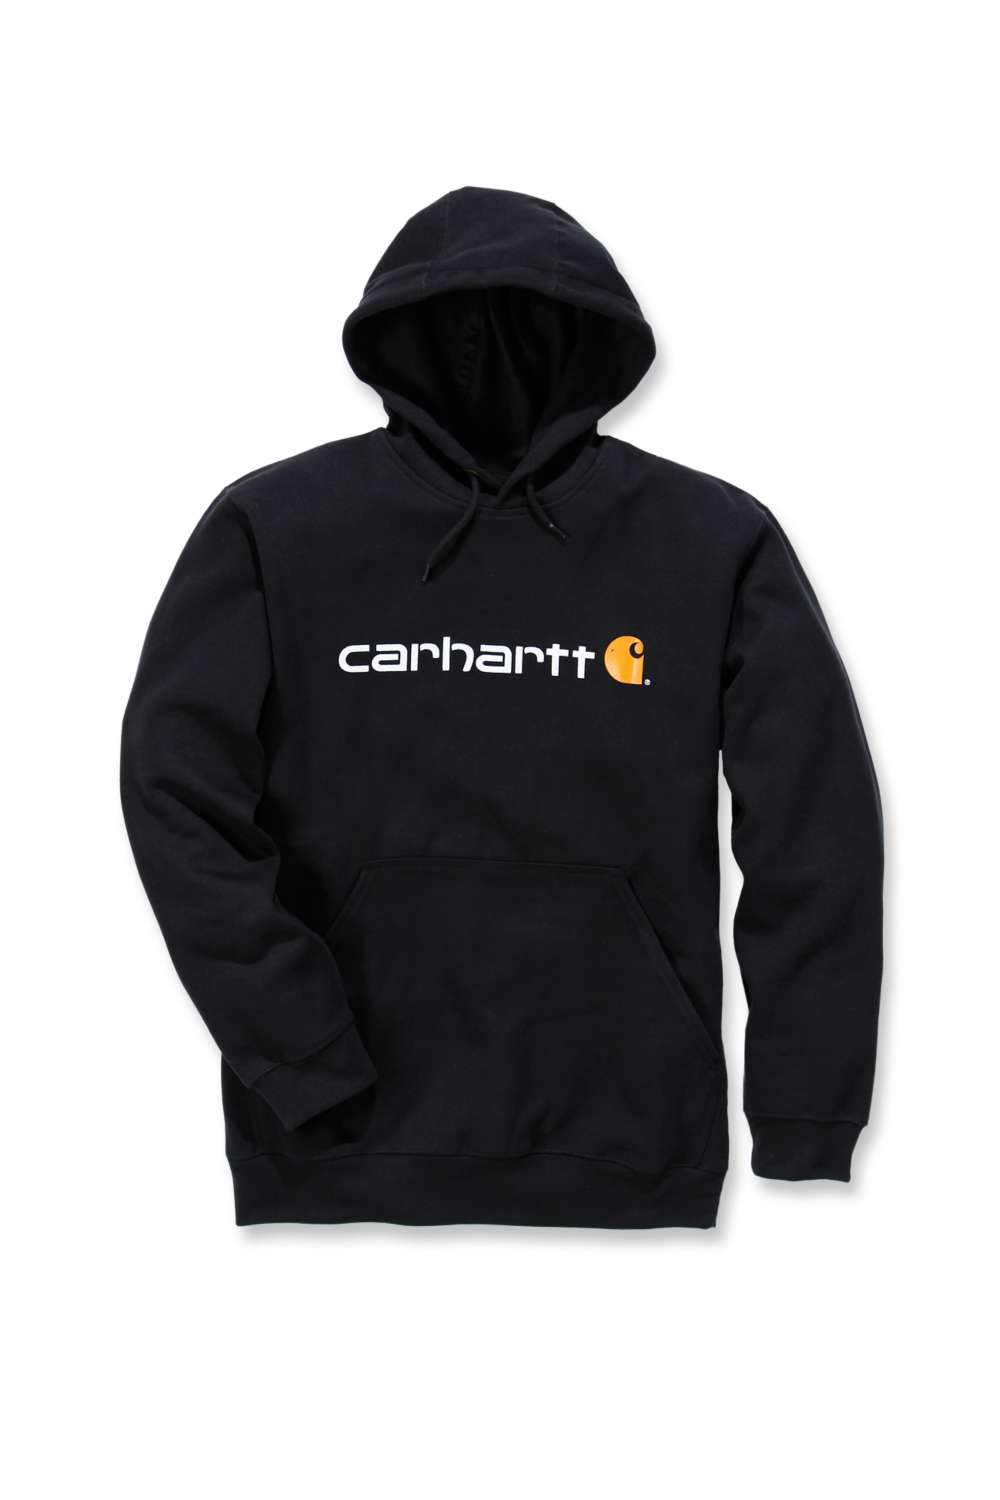 SIGNATURE Herren-Hoodie Fit Mit Carhartt-Logo